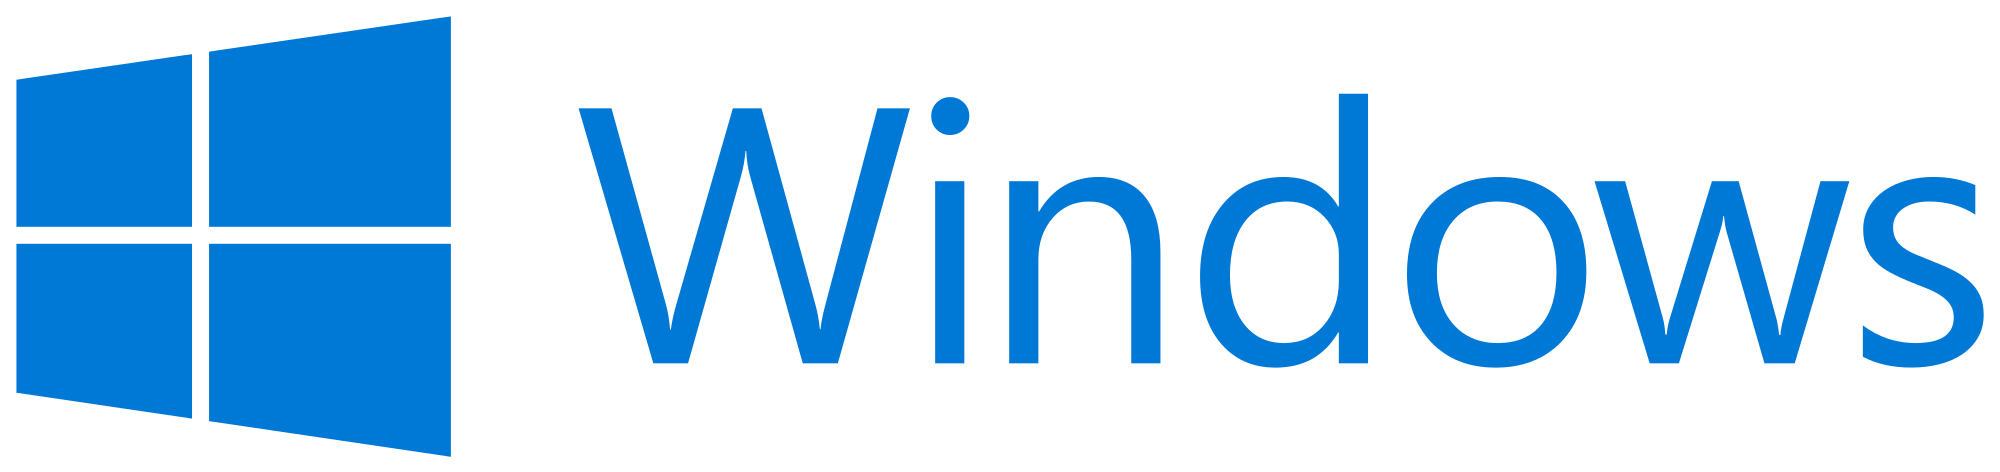 Microsoft Windows Transparante achtergrond